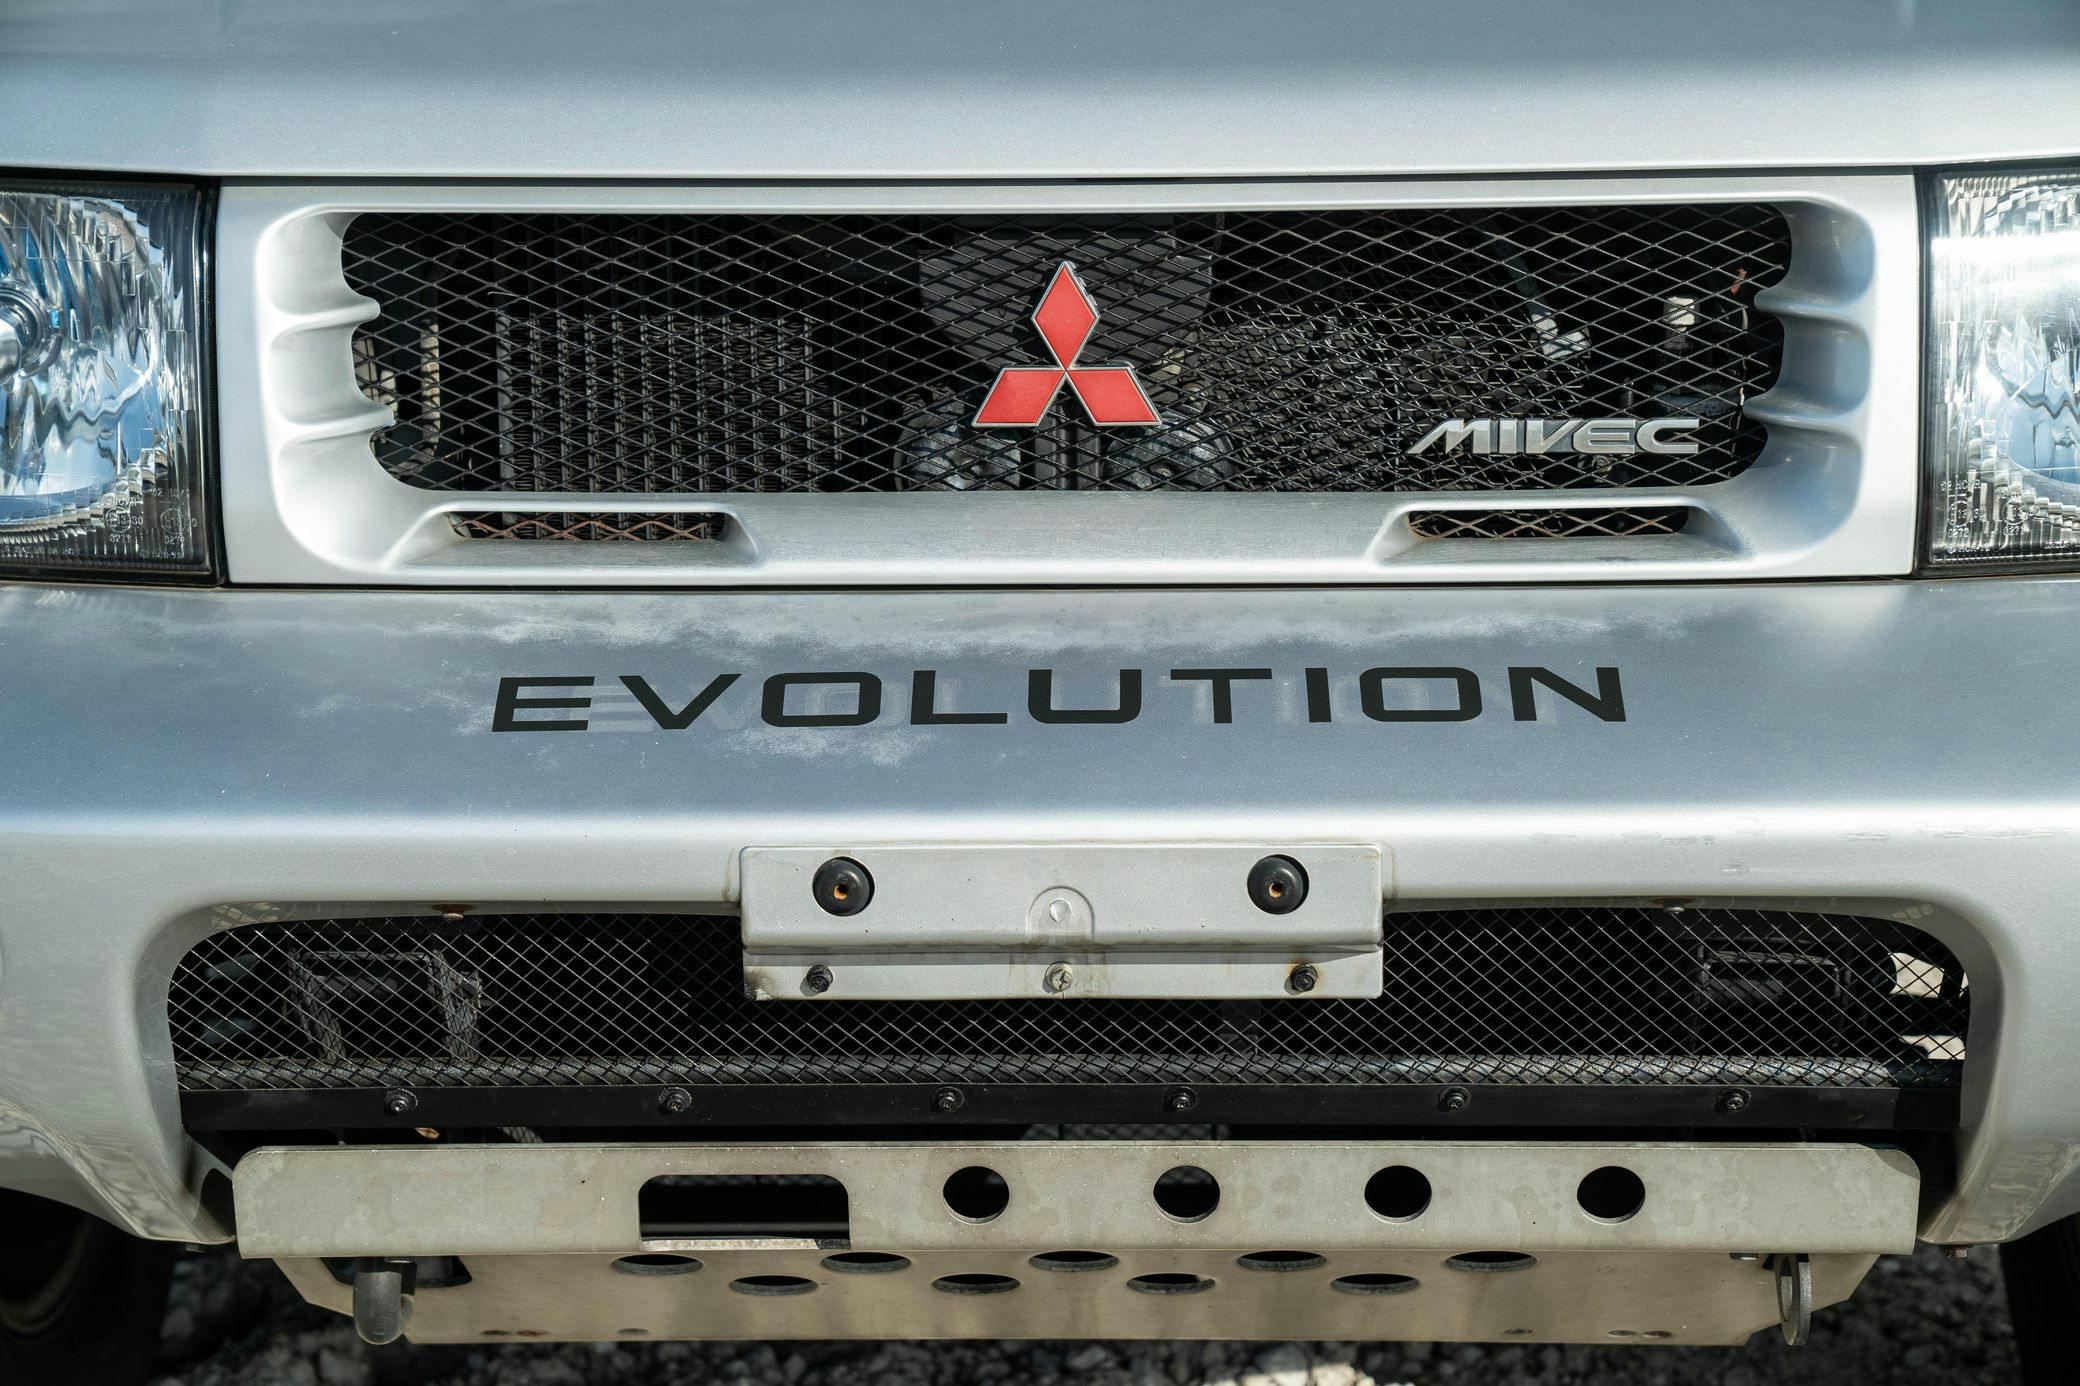 1997 Mitsubishi Pajero Evolution exterior front end sticker detail